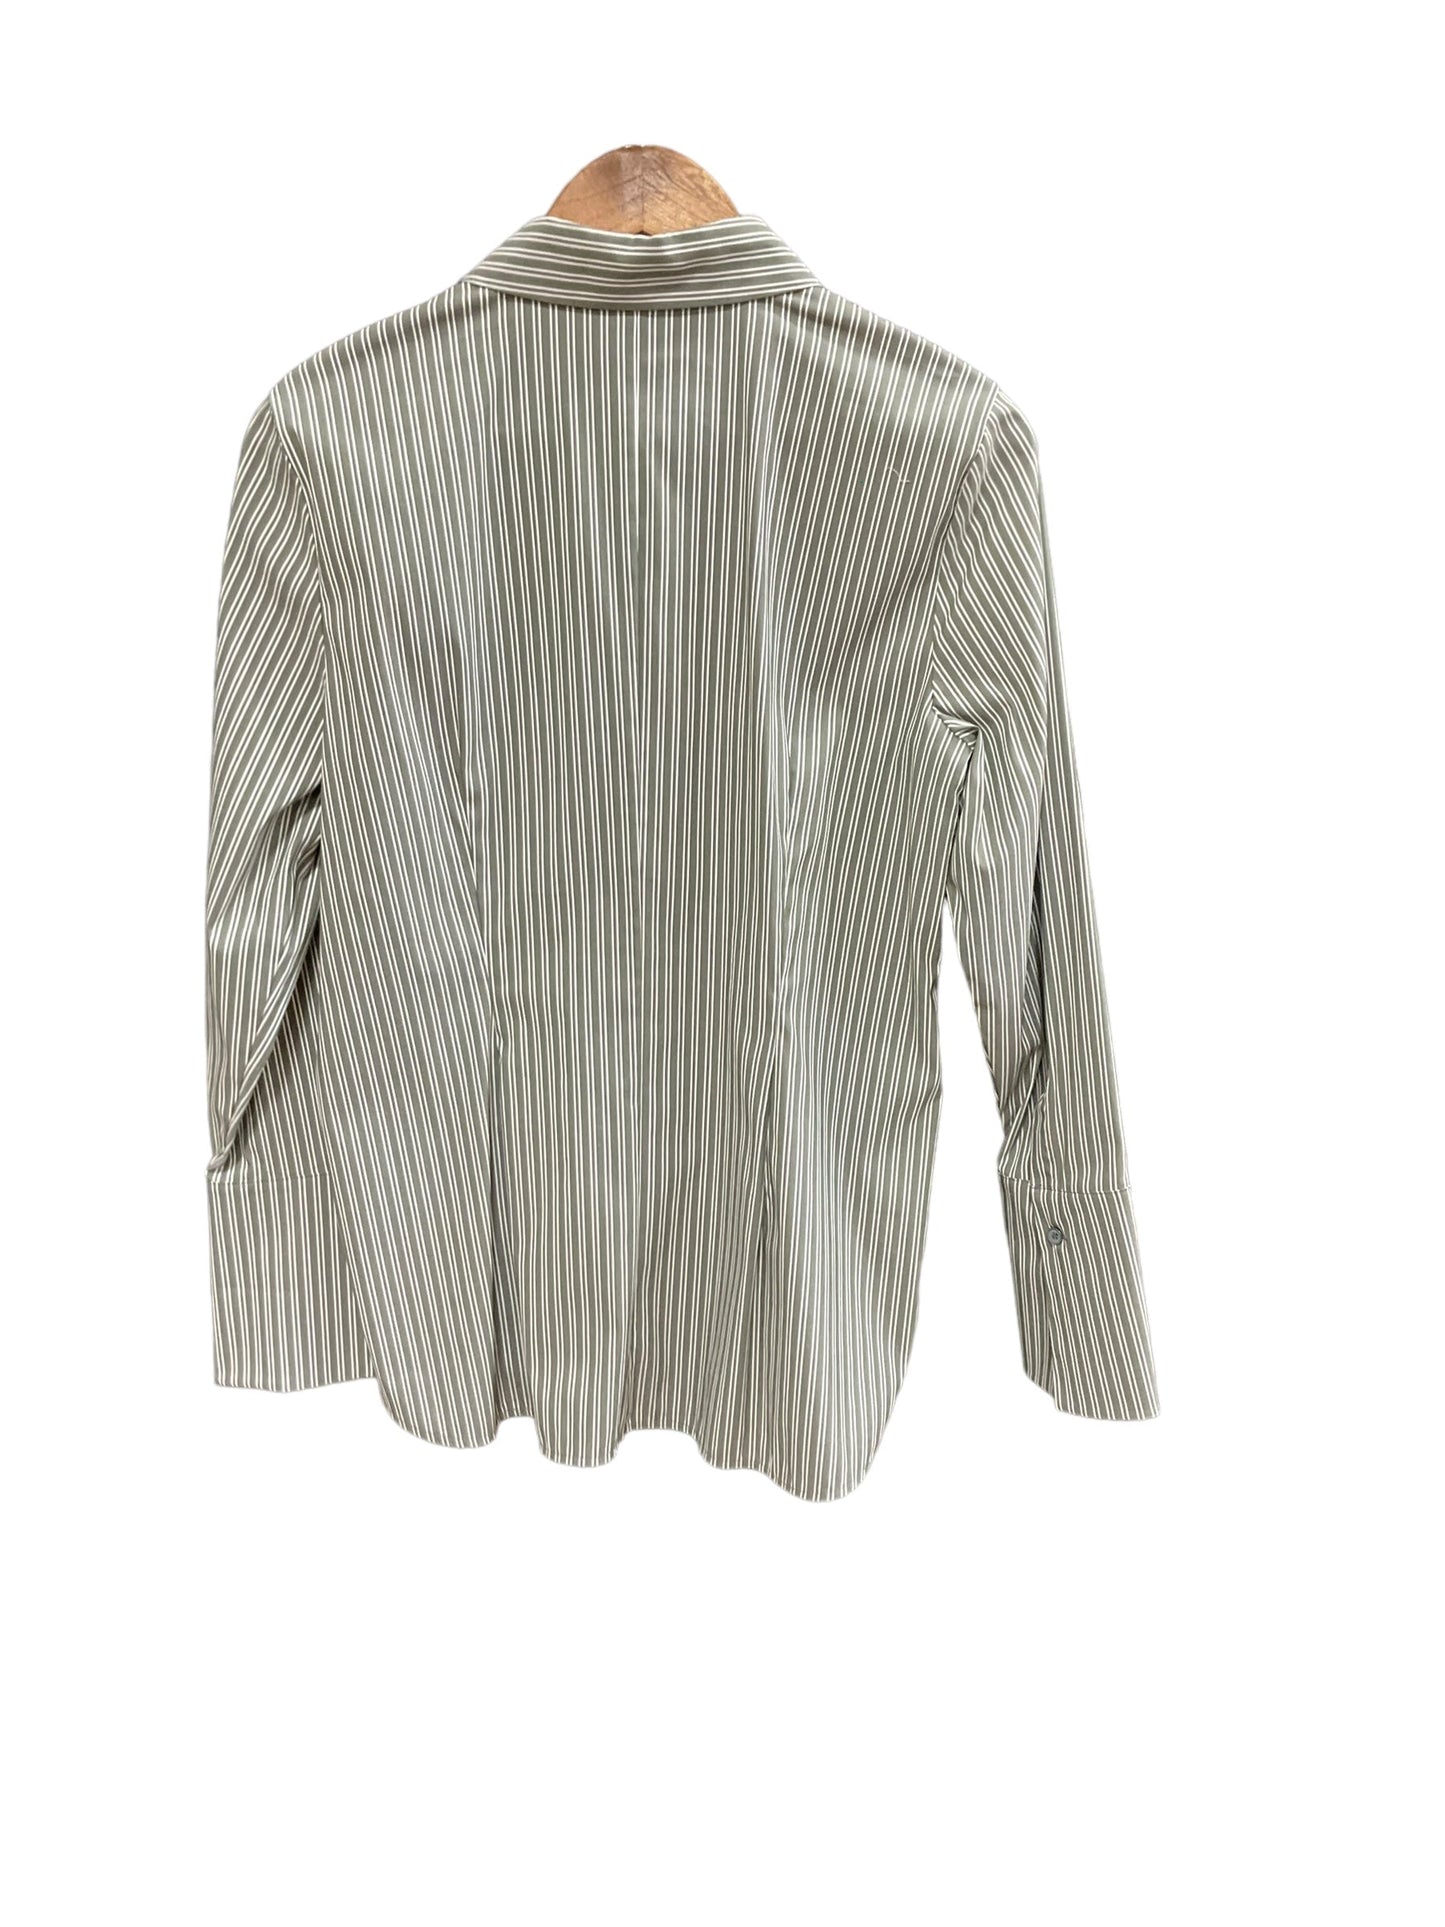 Striped Blouse Long Sleeve Lafayette 148, Size M